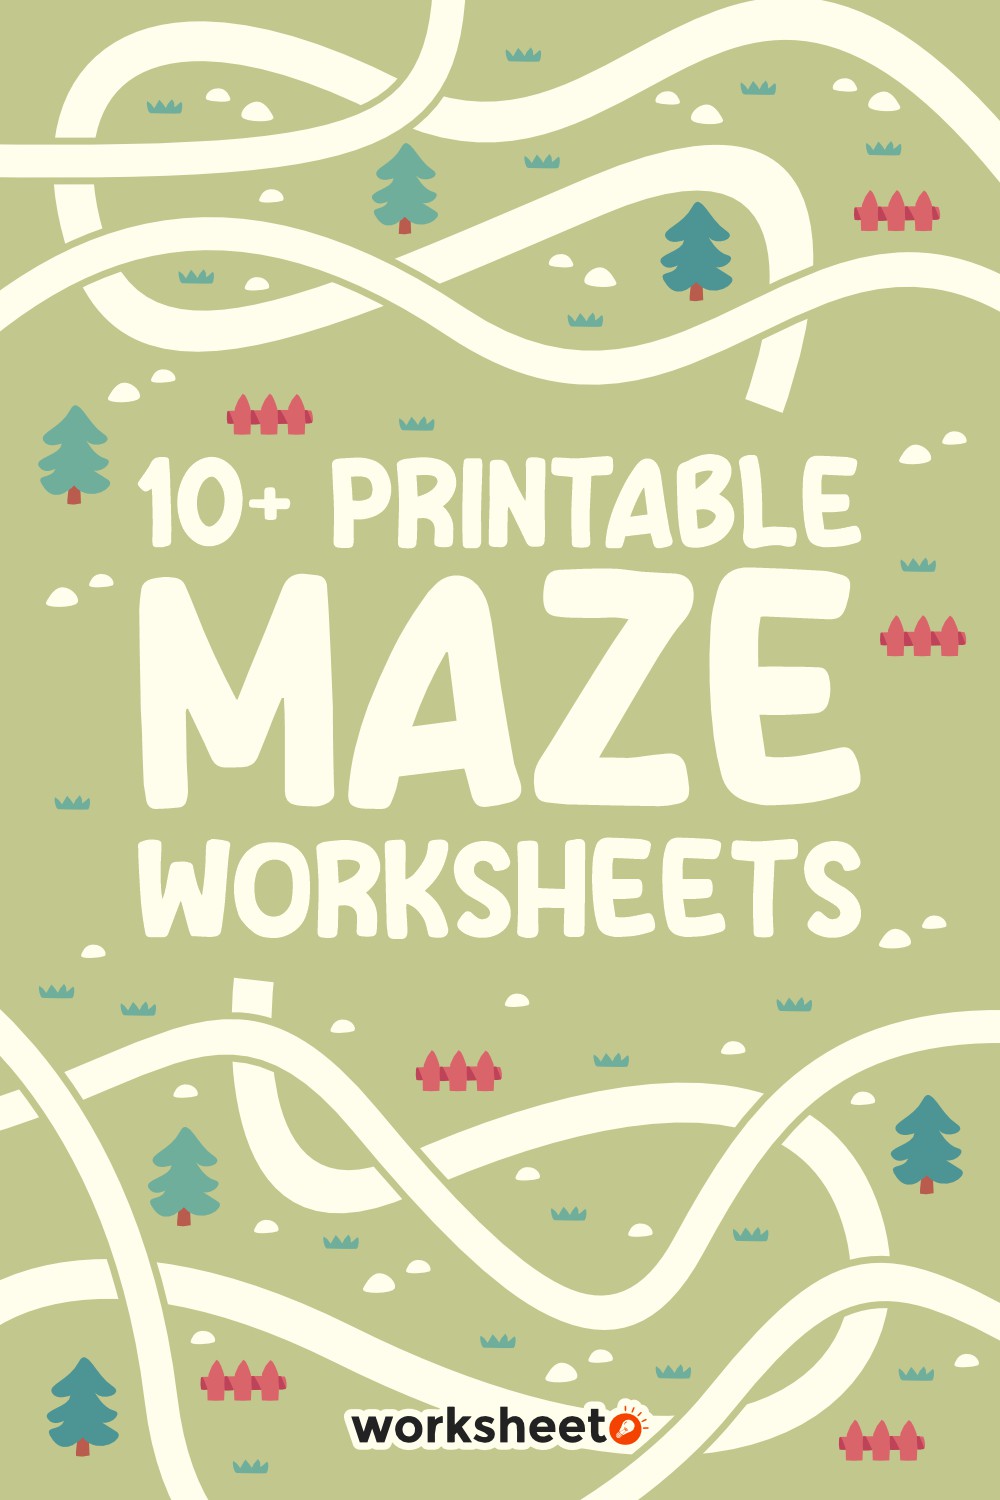 Printable Maze Worksheets